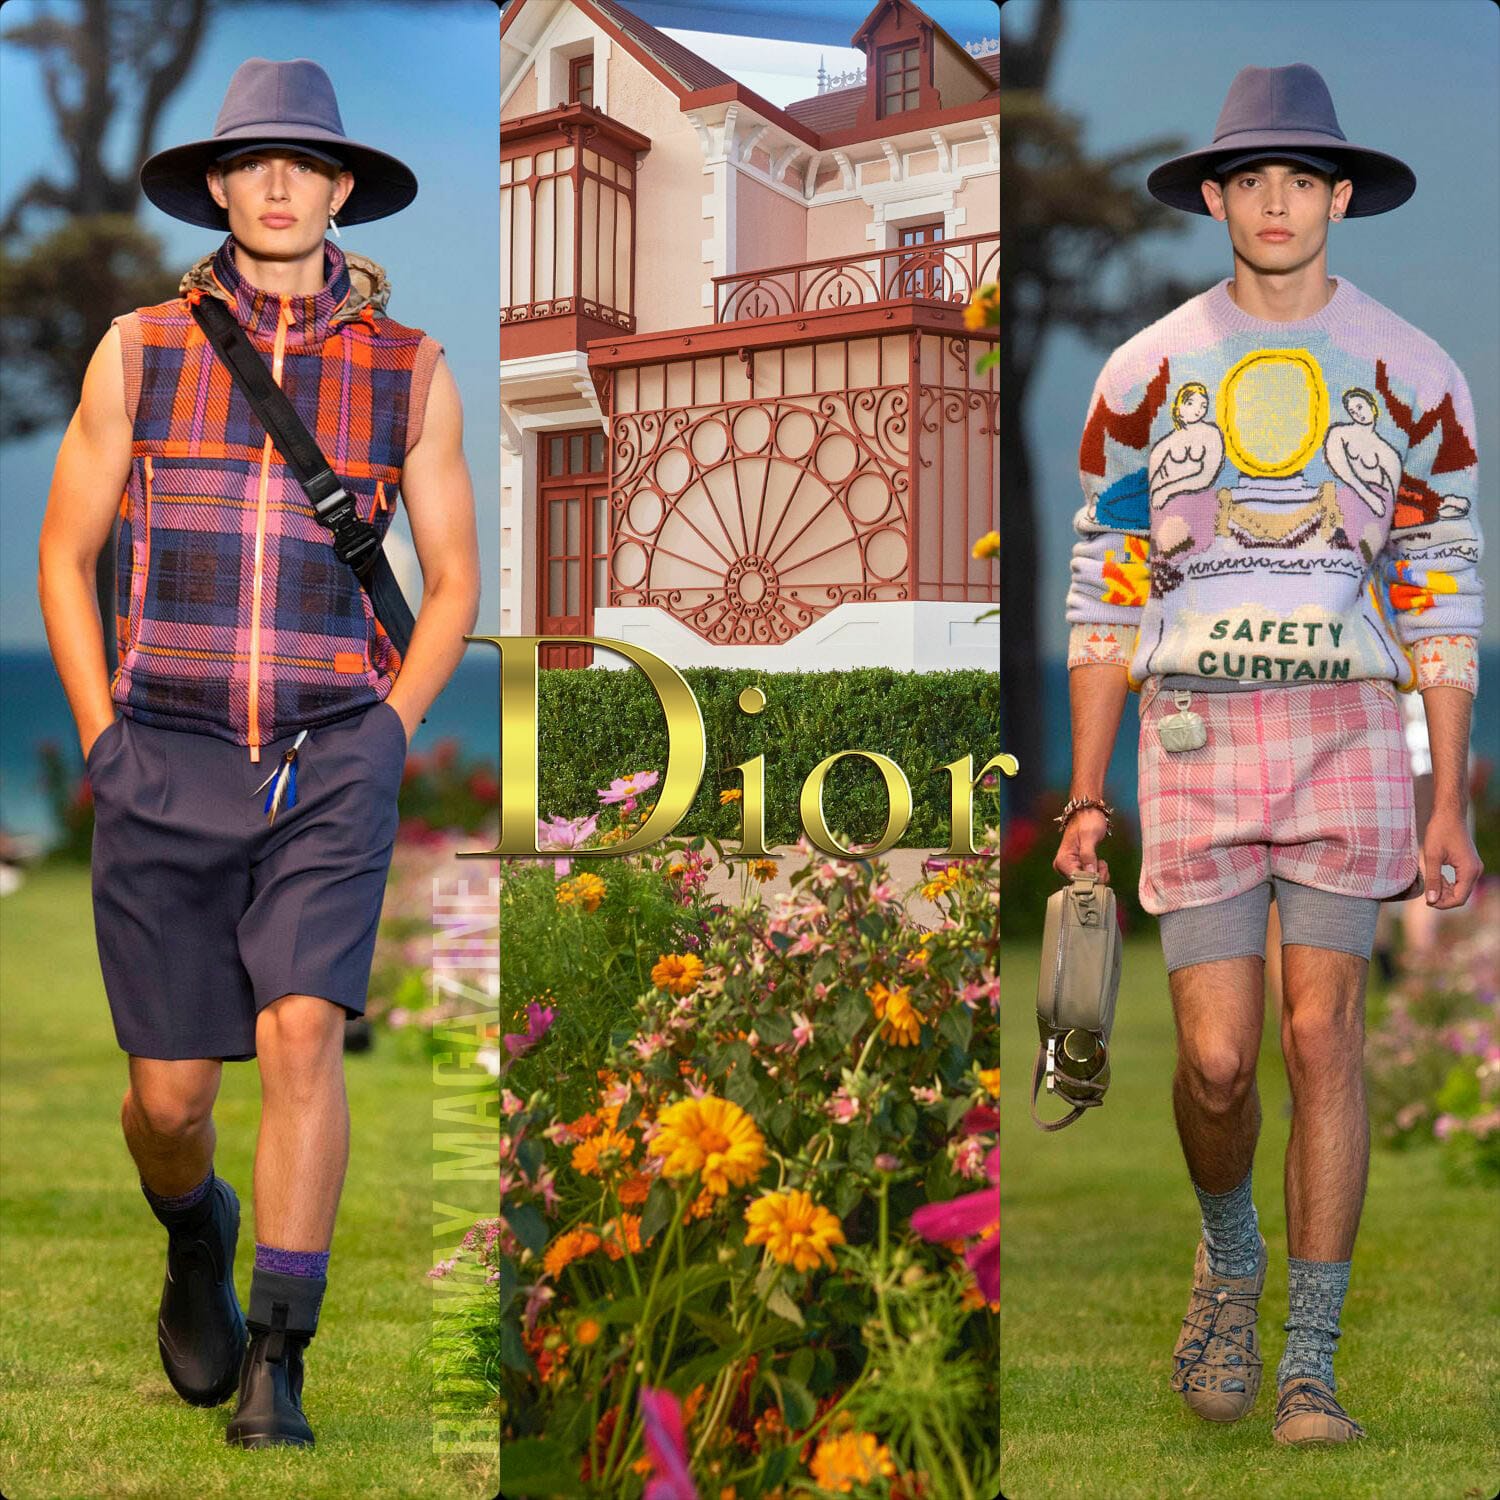 Dior Spring Summer 2023 Men Runway Magazine. RUNWAY MAGAZINE ® Collections. RUNWAY NOW / RUNWAY NEW